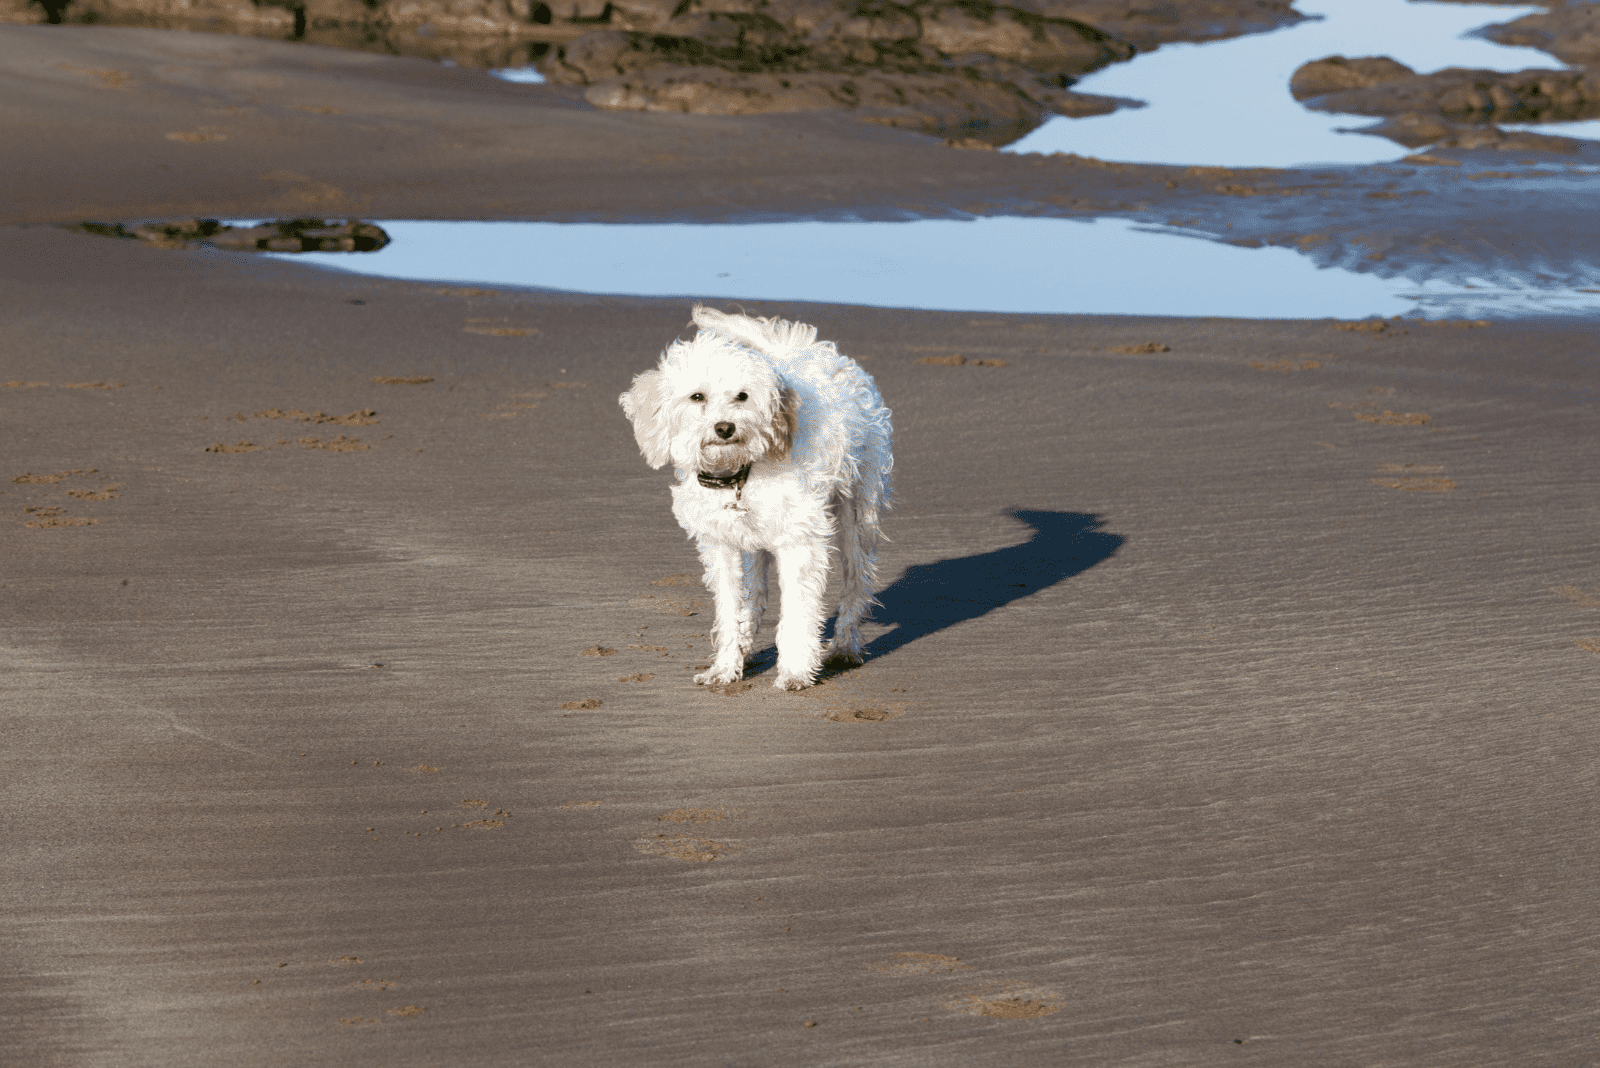 Cavachon walks on the beach